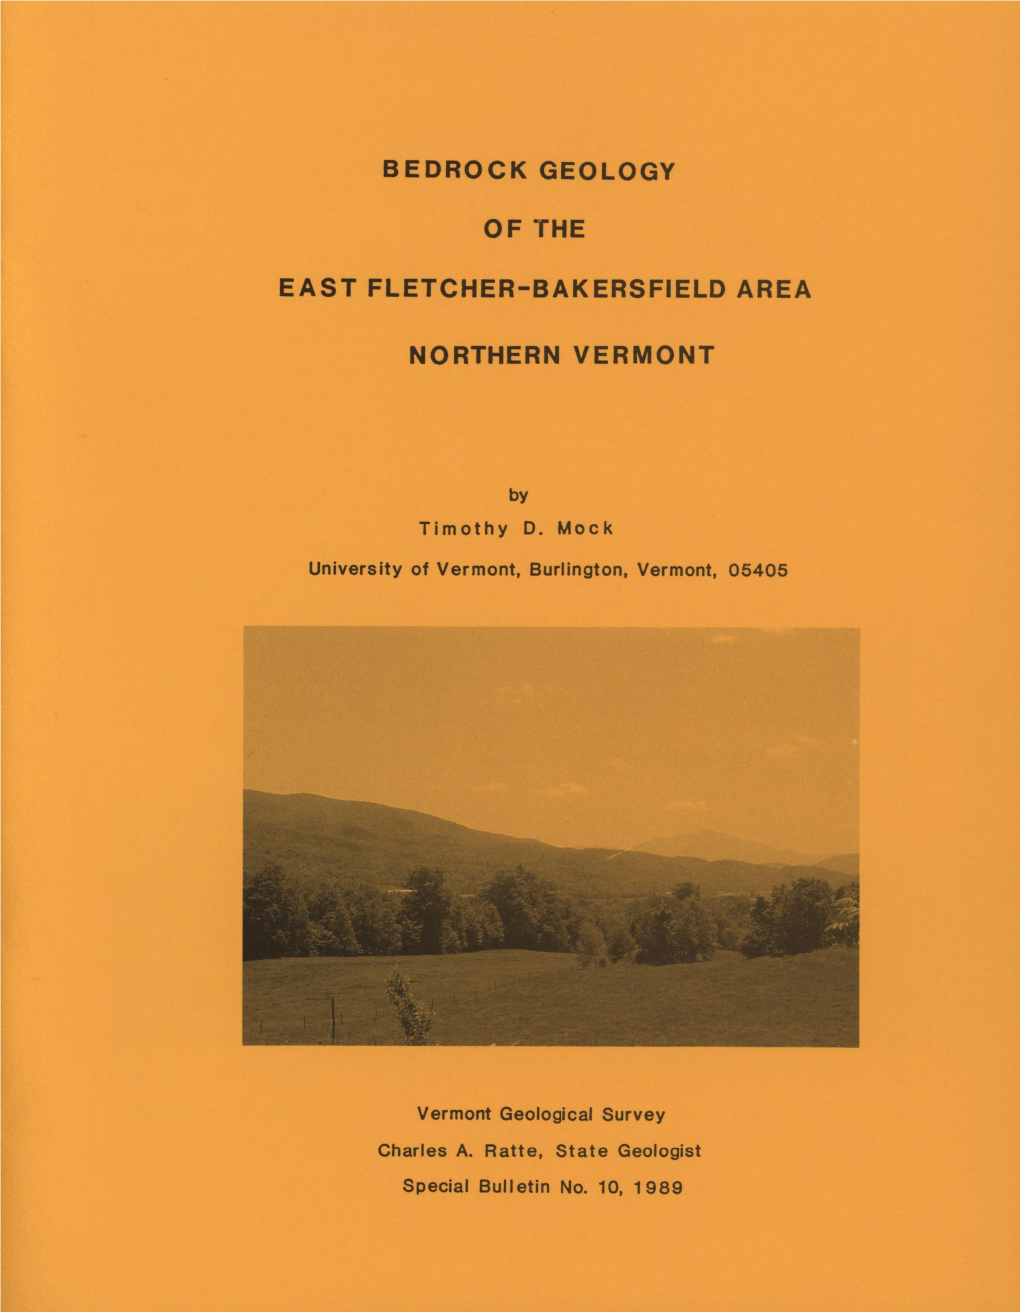 Bedrock Geology of the East Fletcher-Bakersfield Area